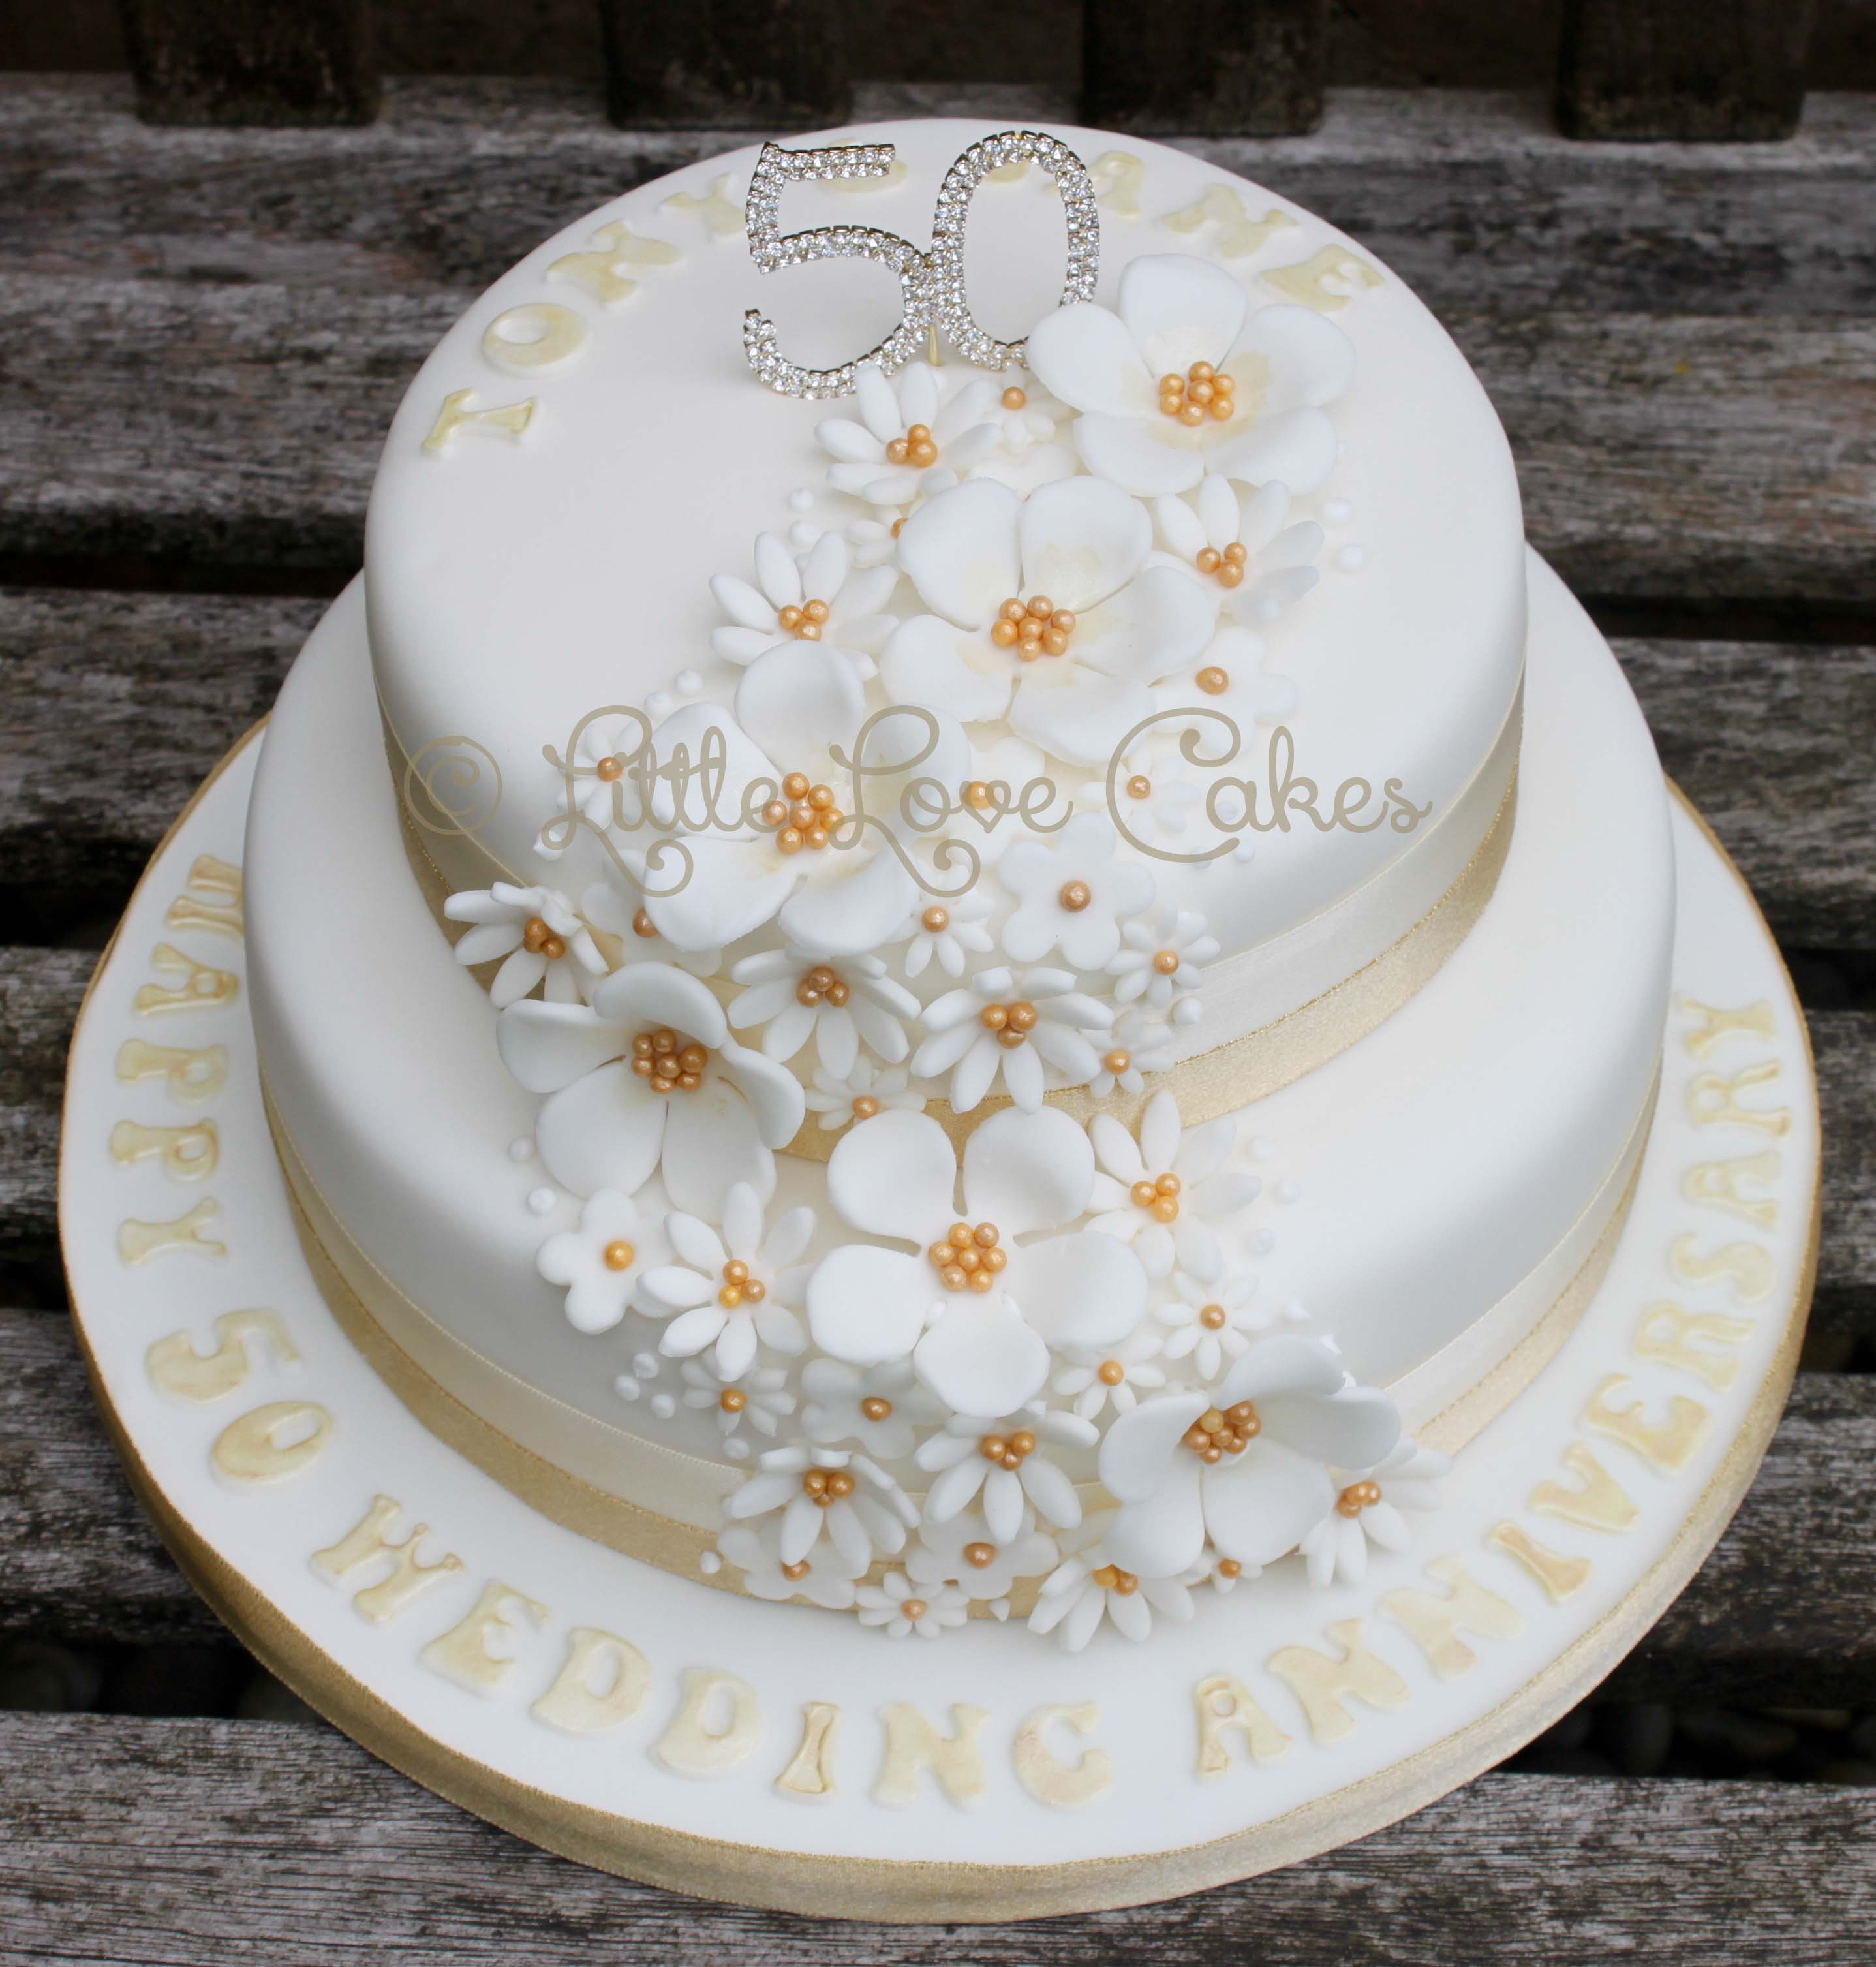 50th Golden wedding anniversary cake